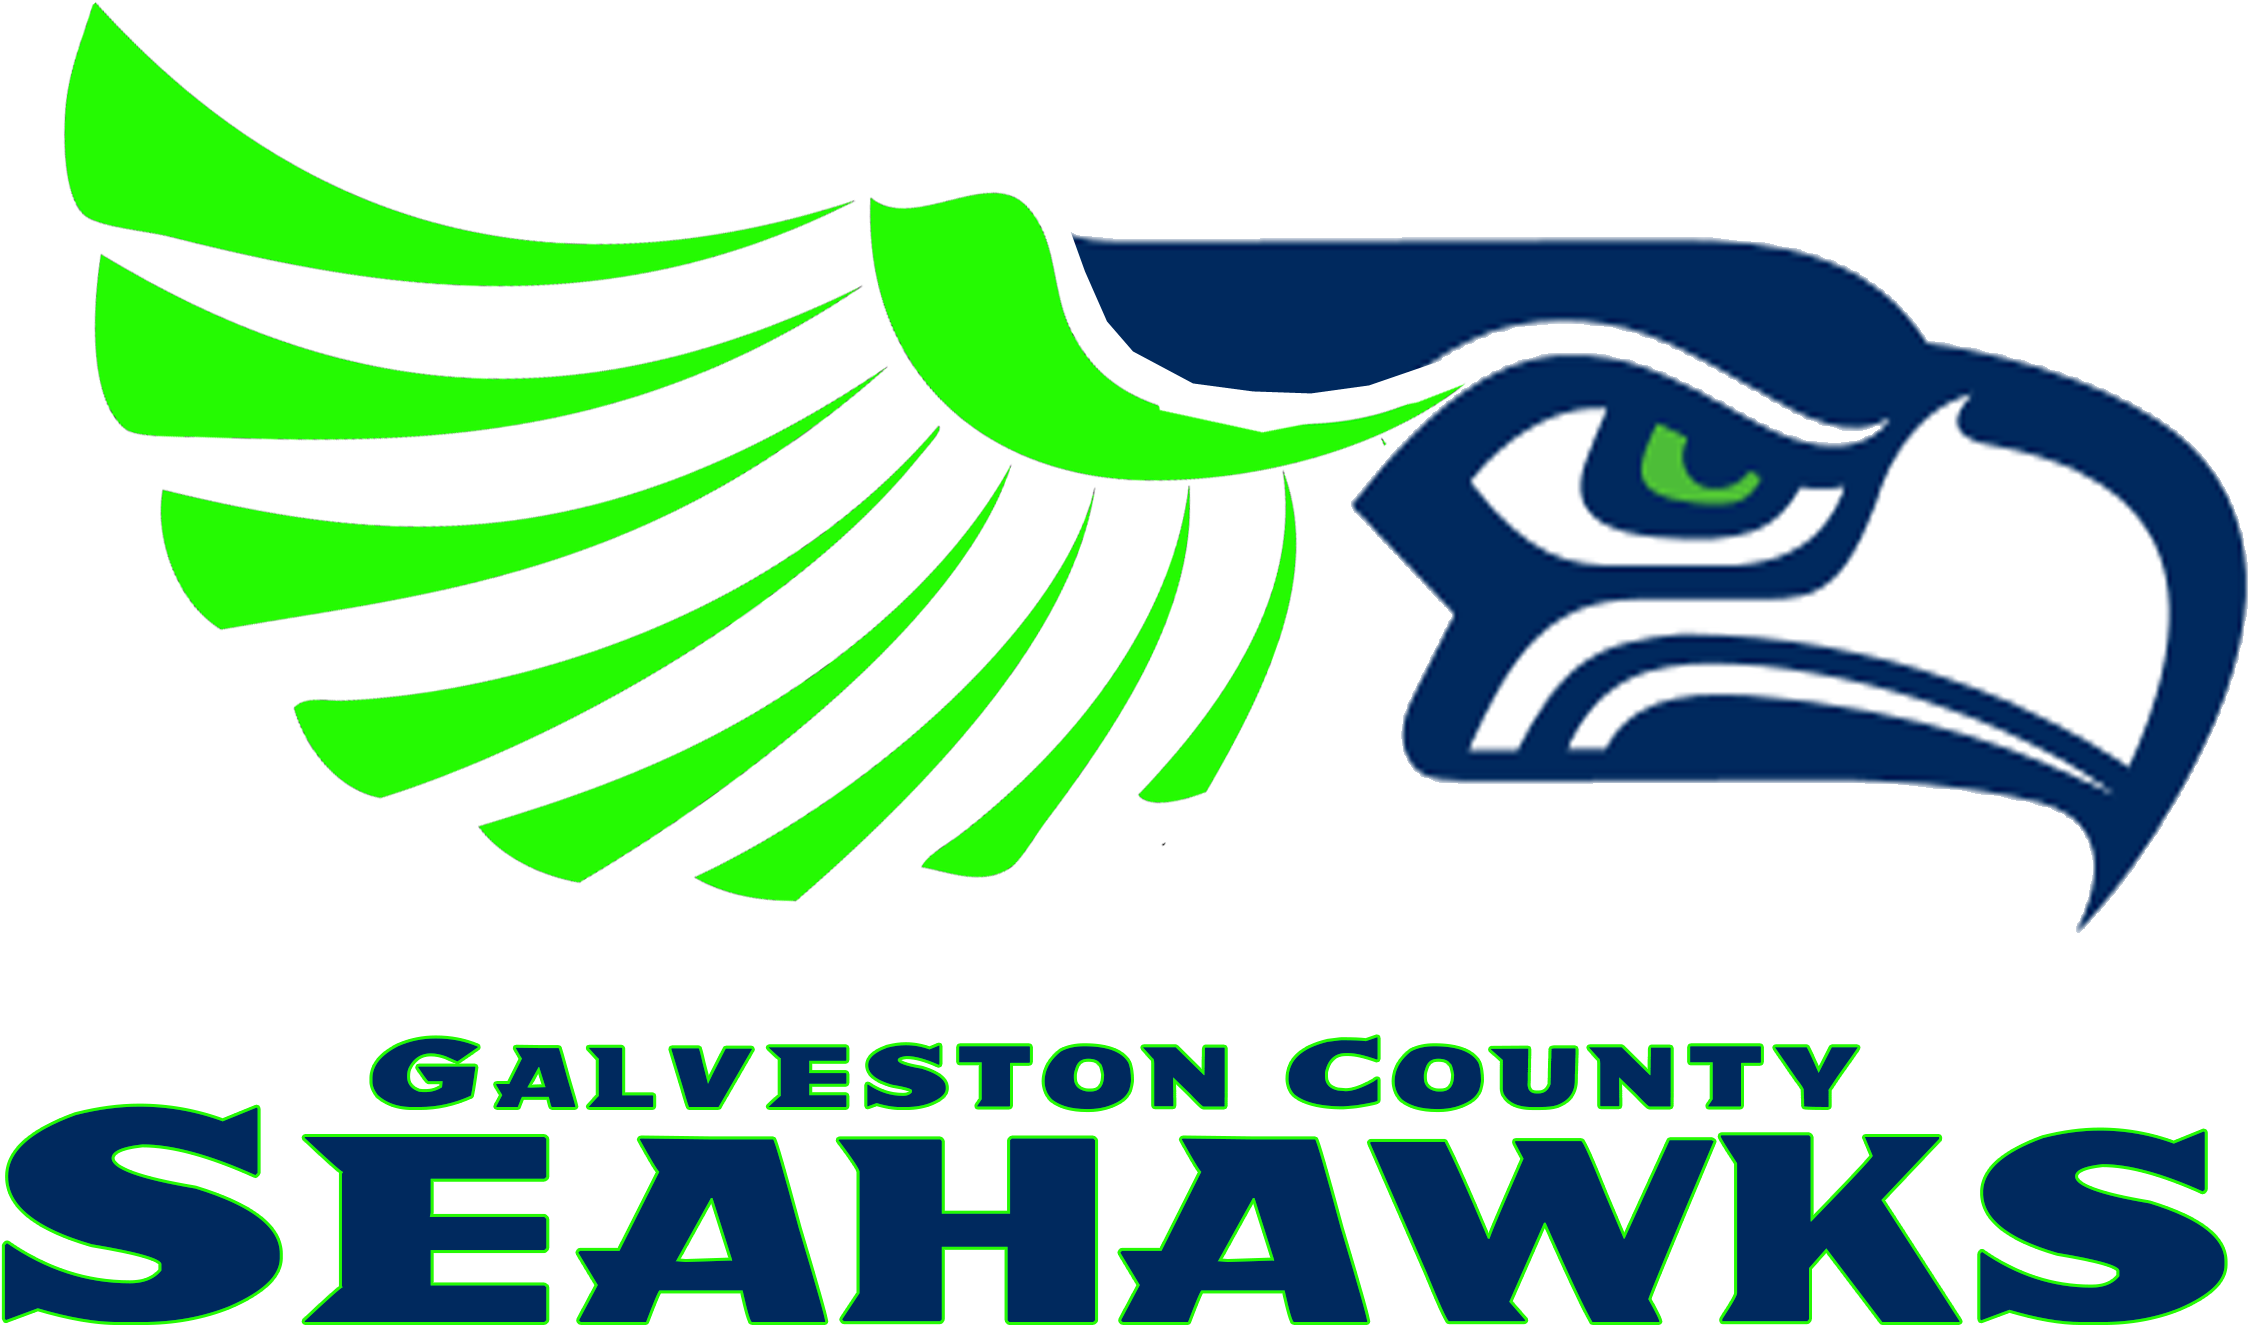 Seattle Seahawks Logo Png